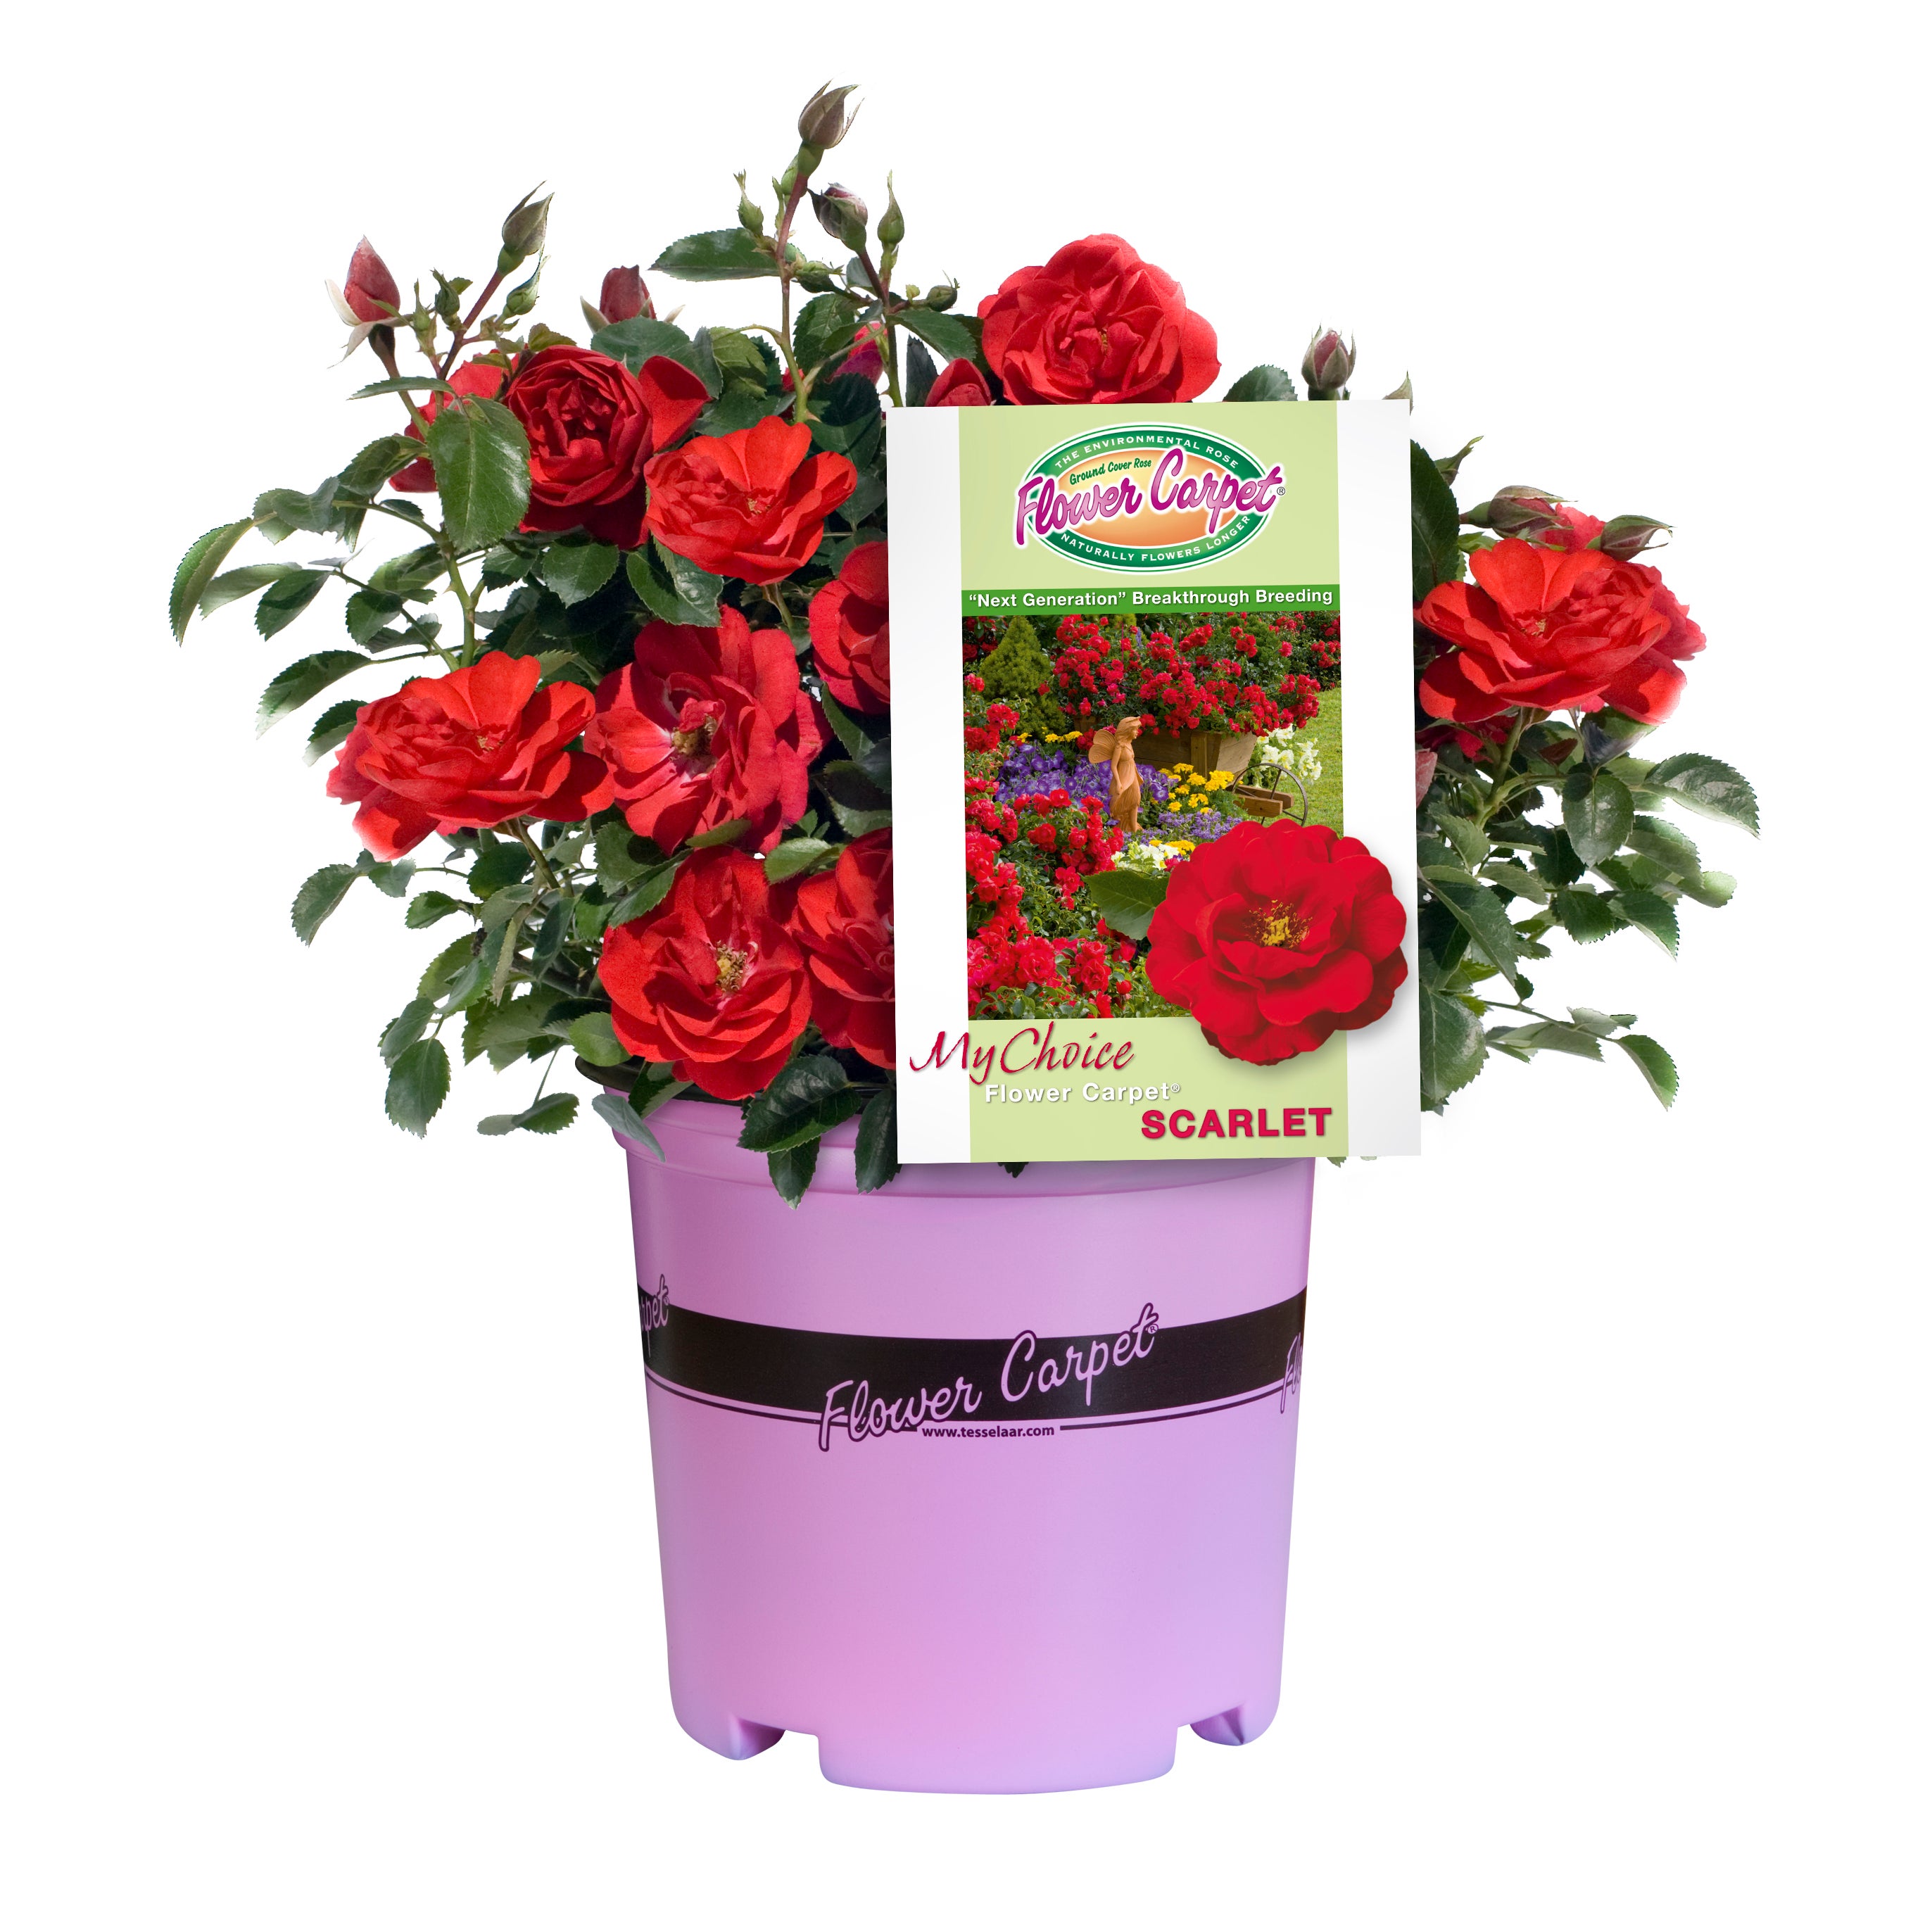 Flower Carpet Rose Scarlet 2 5l Roses Kings Plant Barn Nz Garden Centres Online Cafes